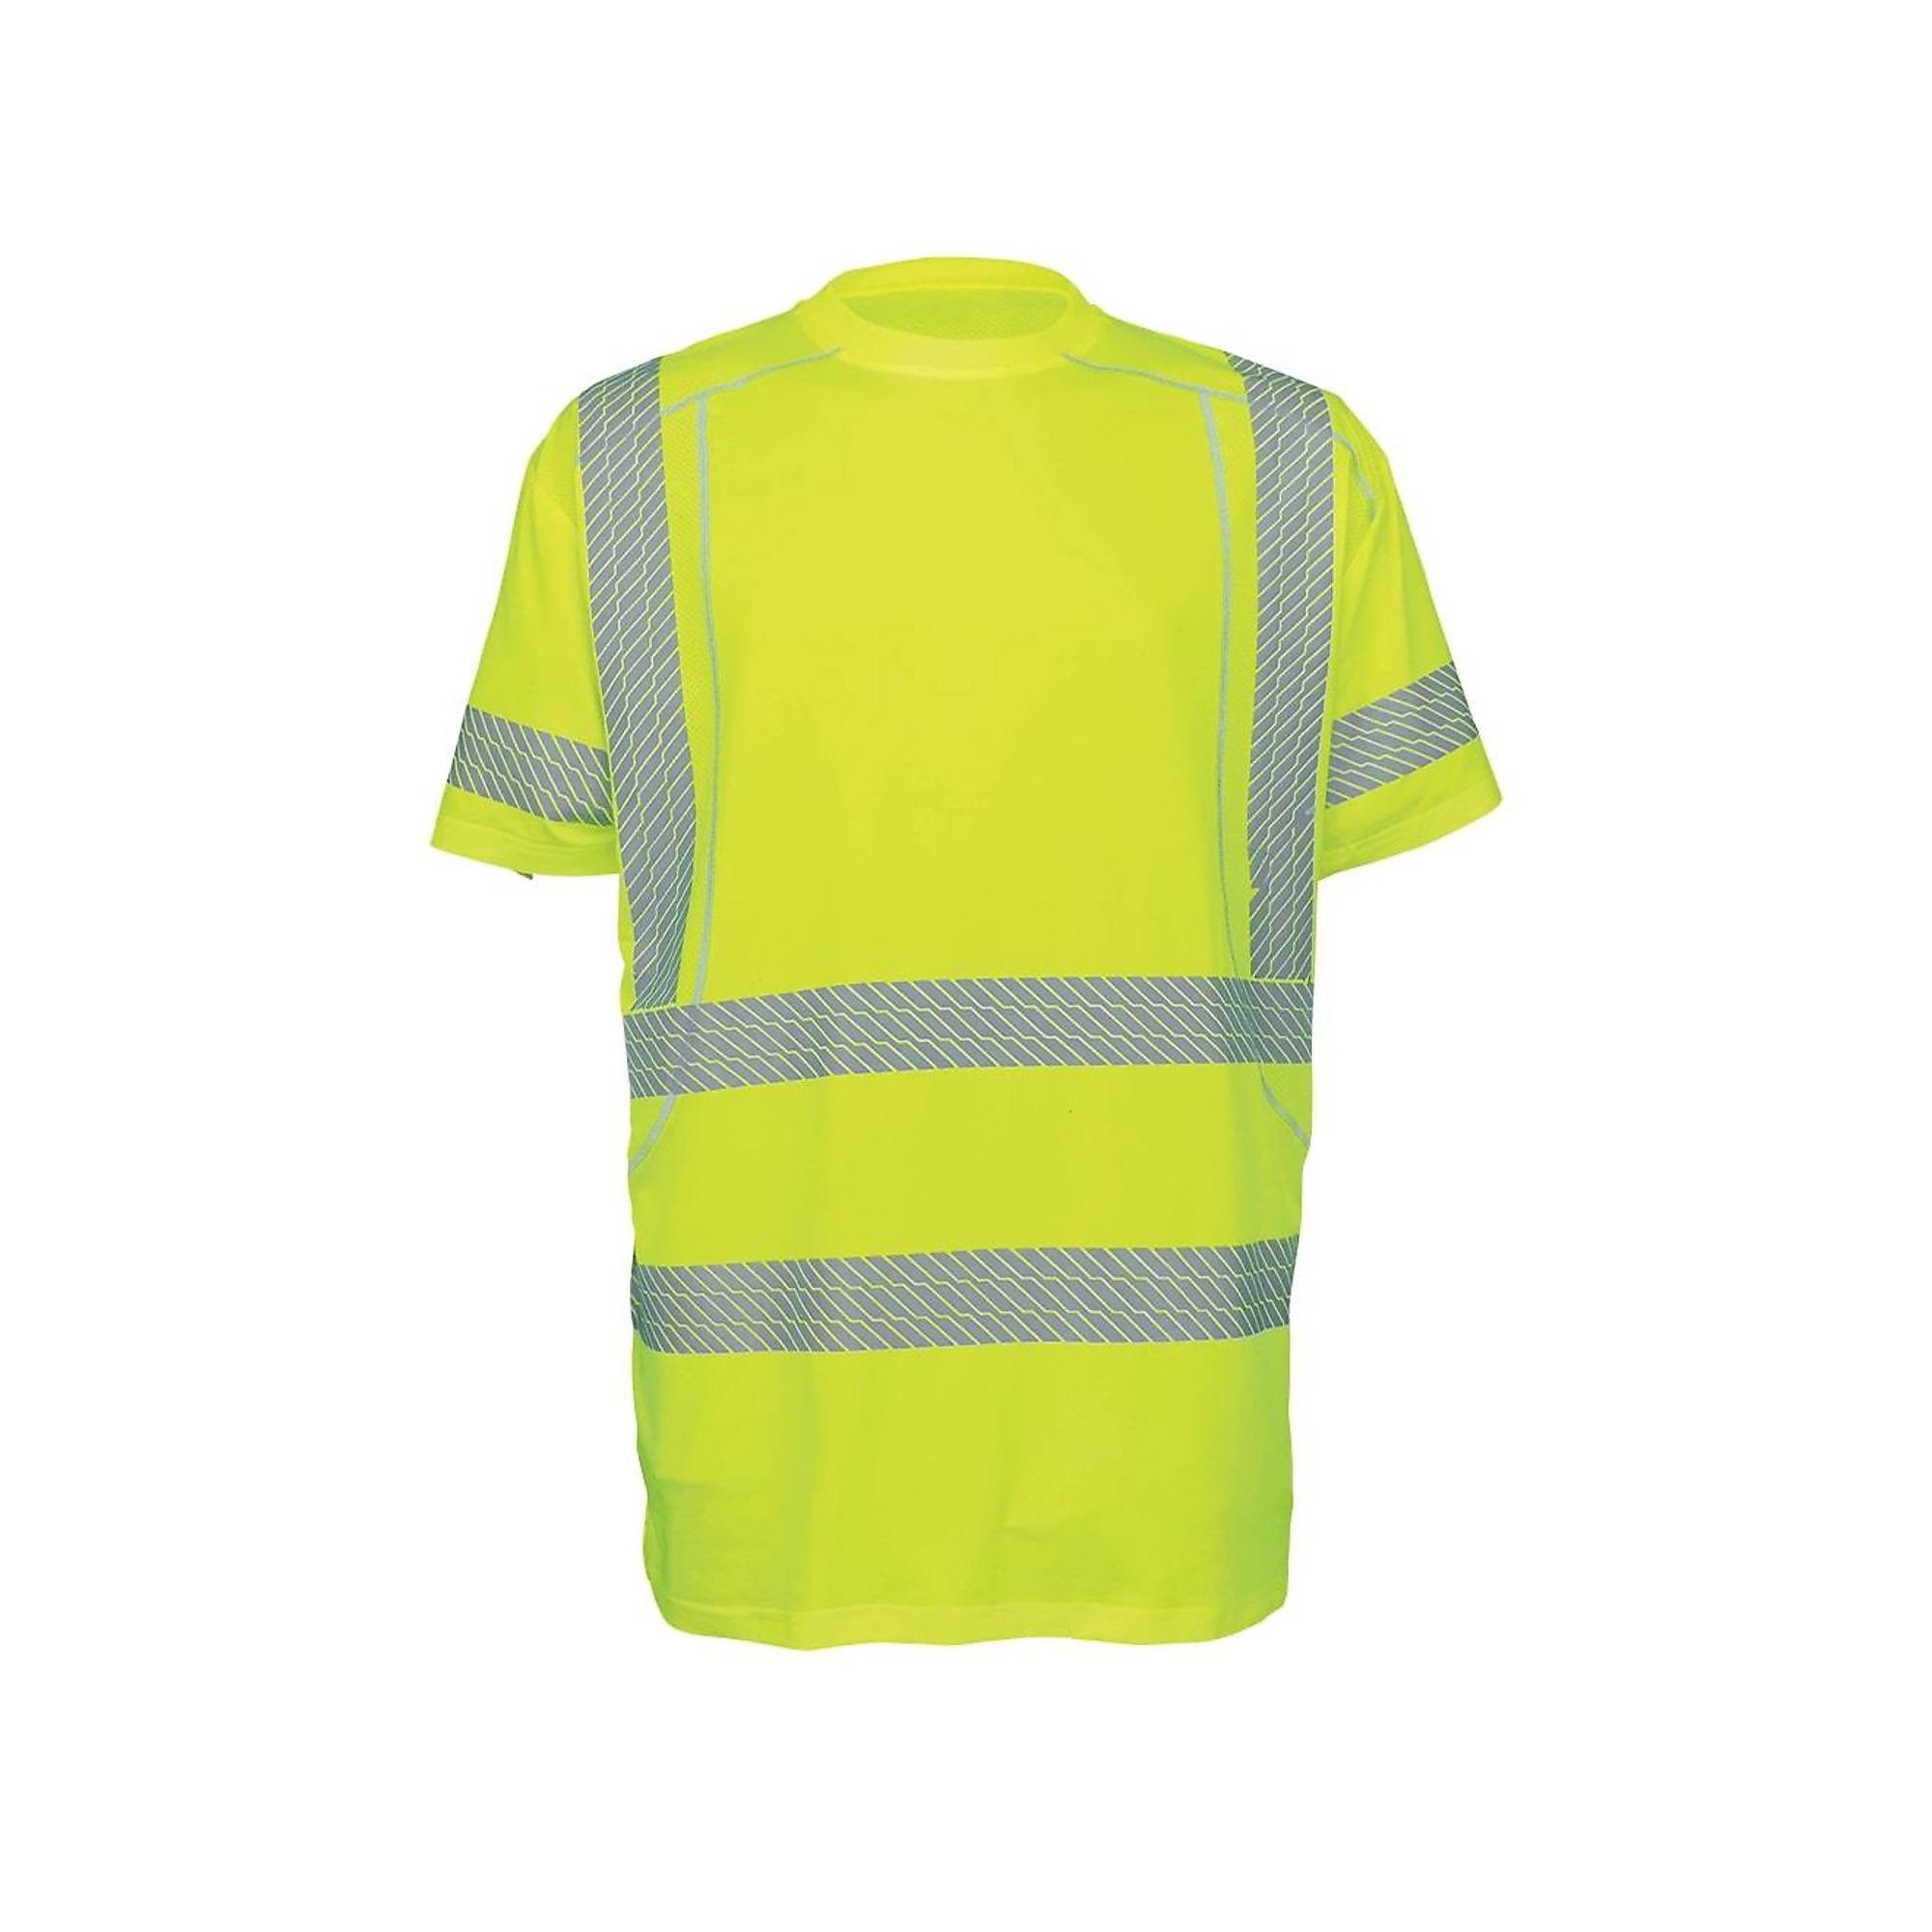 FrogWear, HV Yellow/Green, Class 3 Self-Wicking, Athletic Shirt, Size 4XL, Model GLO-205-4XL